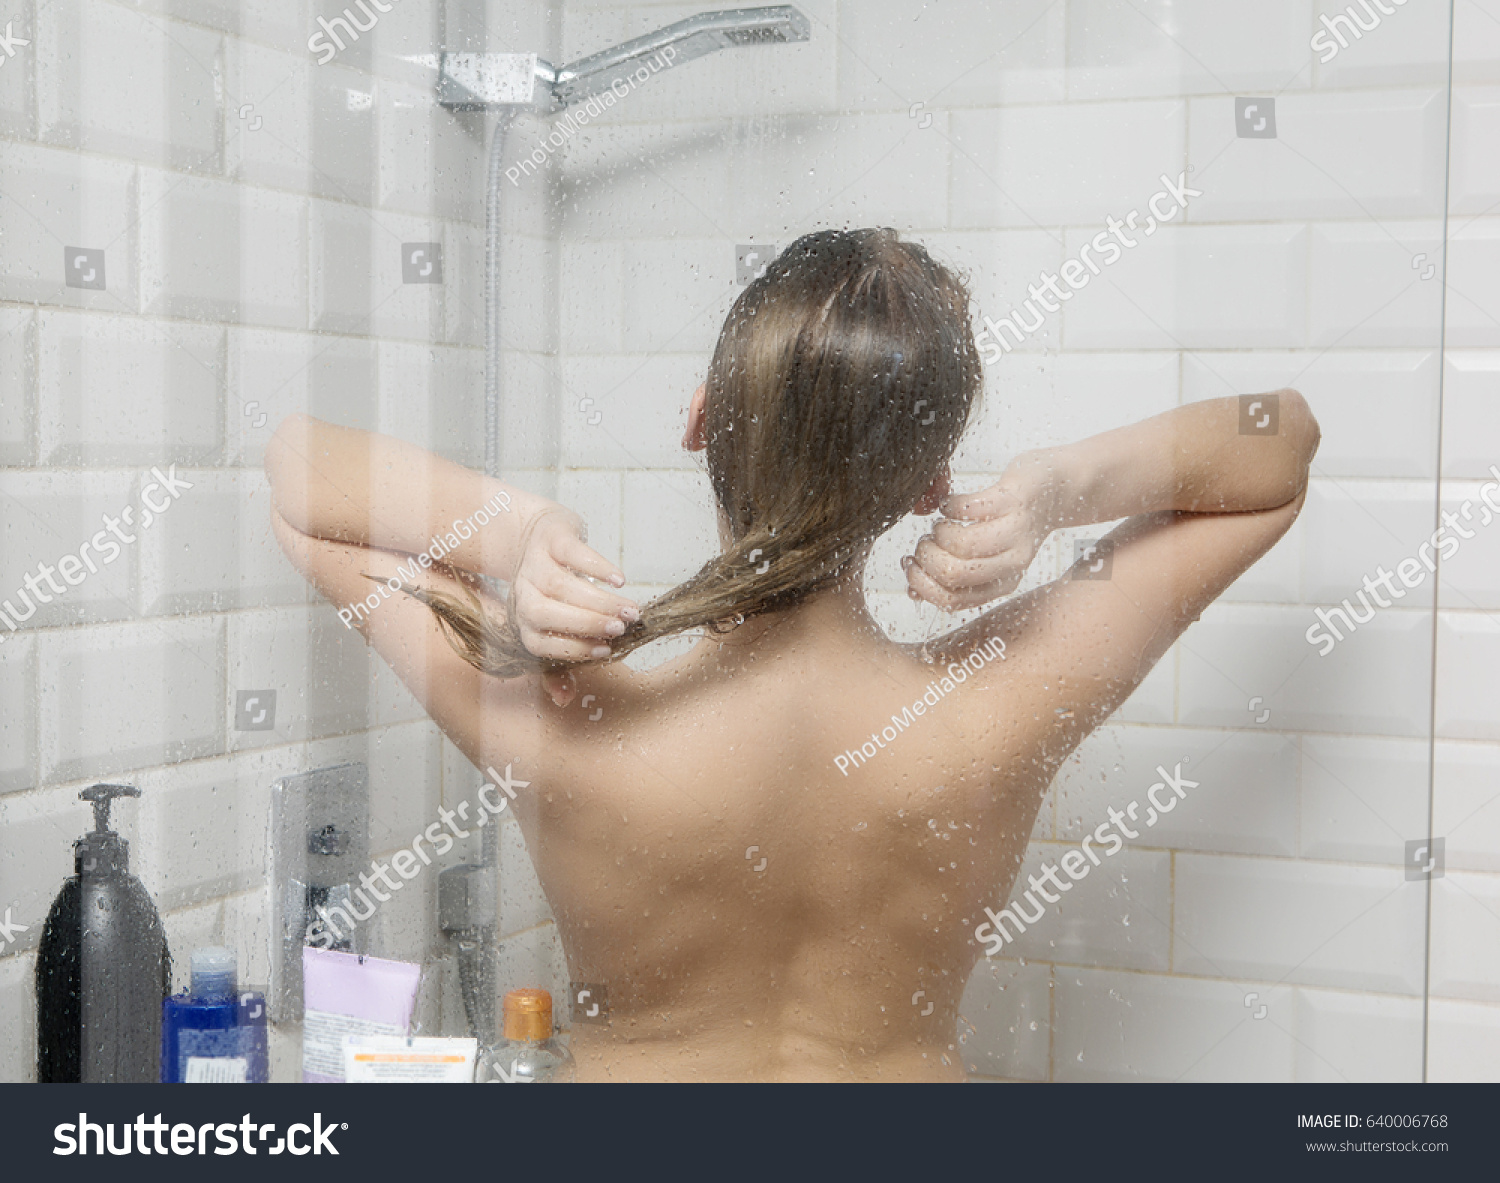 Naked Women Taking Showers